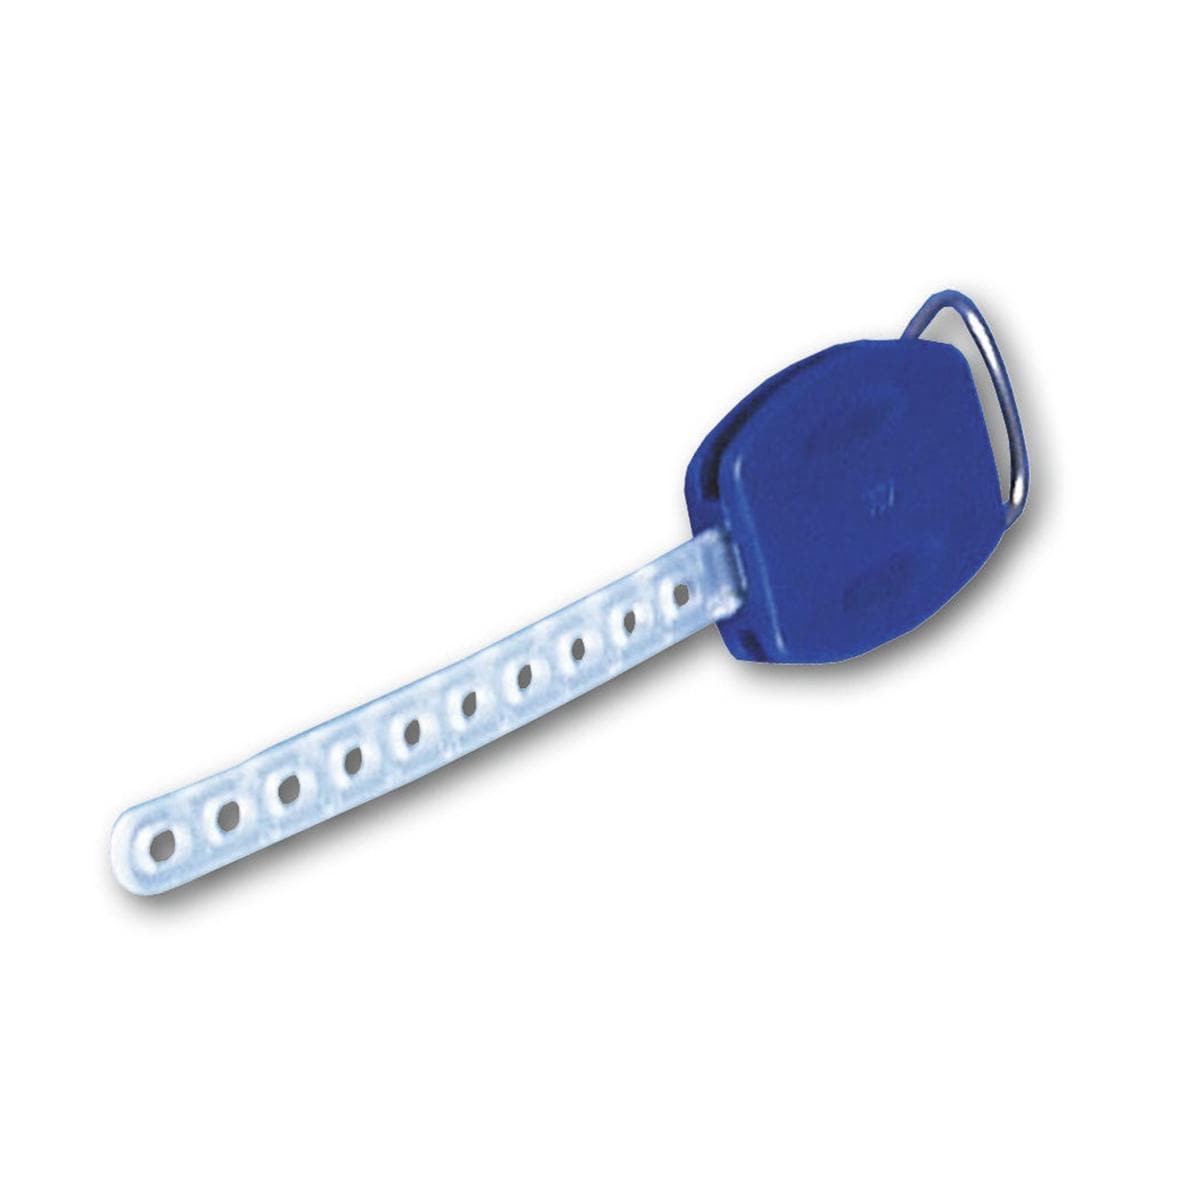 Safety clips - Bleu, 750 g